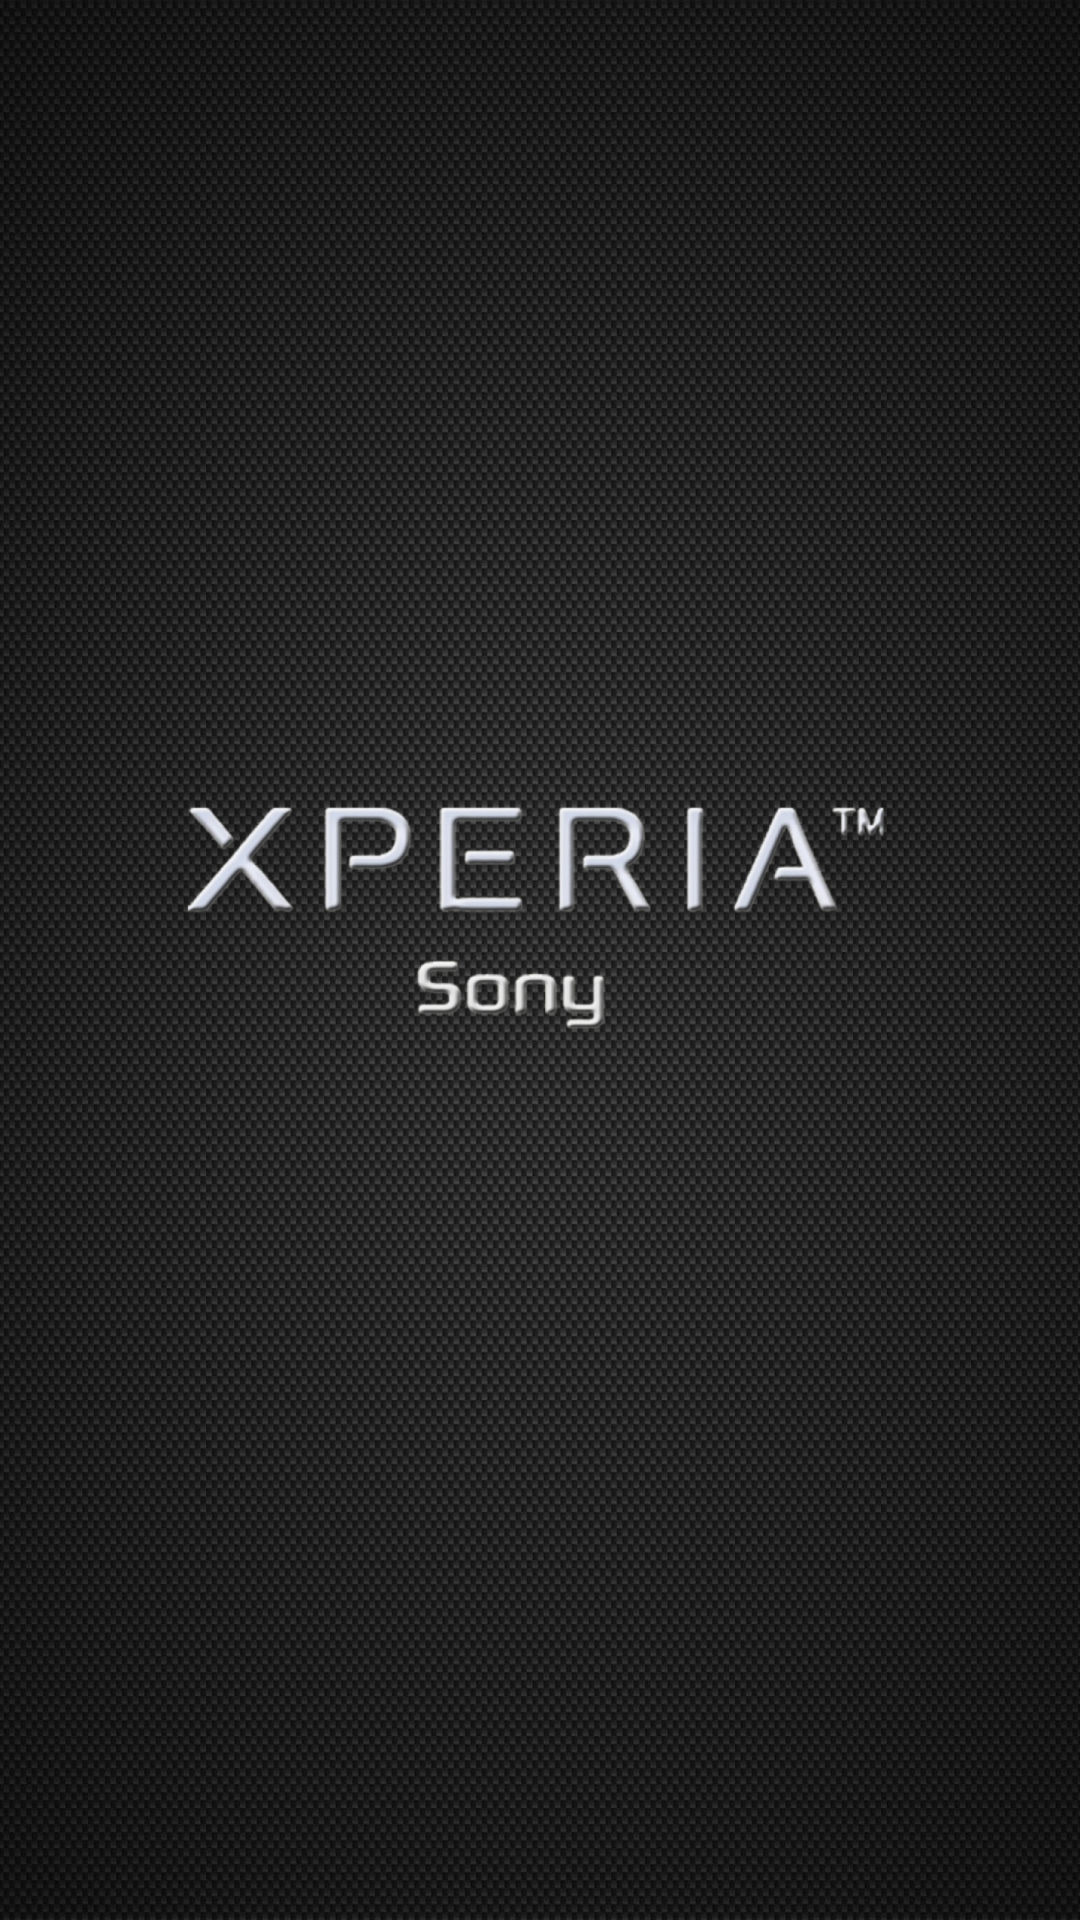 Обои Sony Xperia 1080x1920